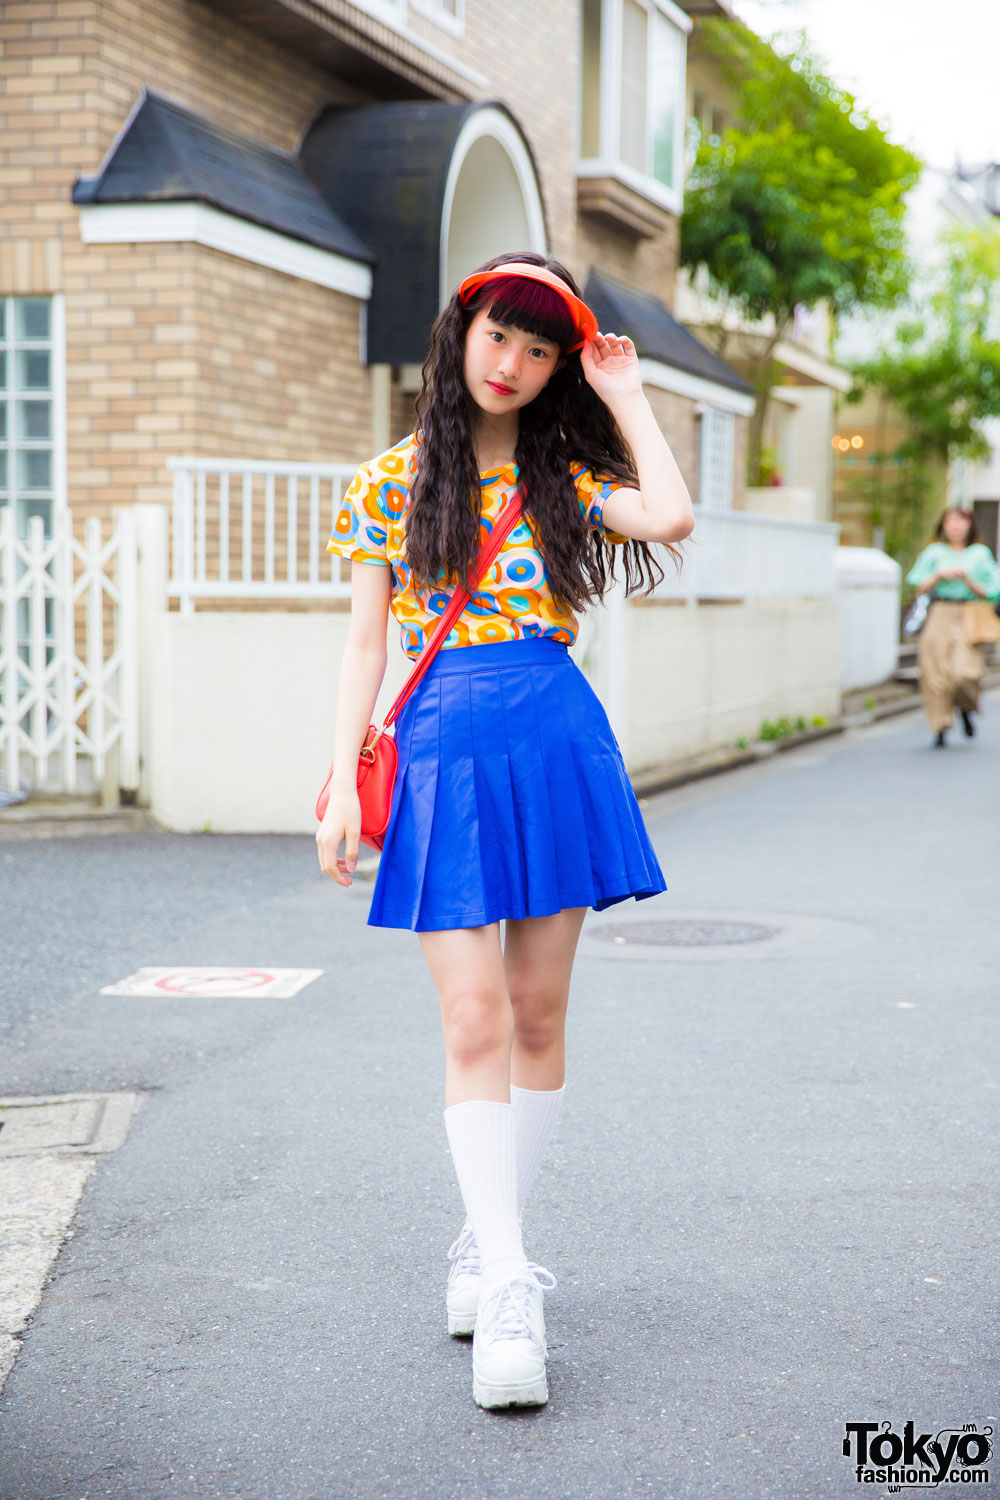 Harajuku Model/Actress in Colorful Street Style with Visor, Kiki2 Pleated Skirt & Platforms